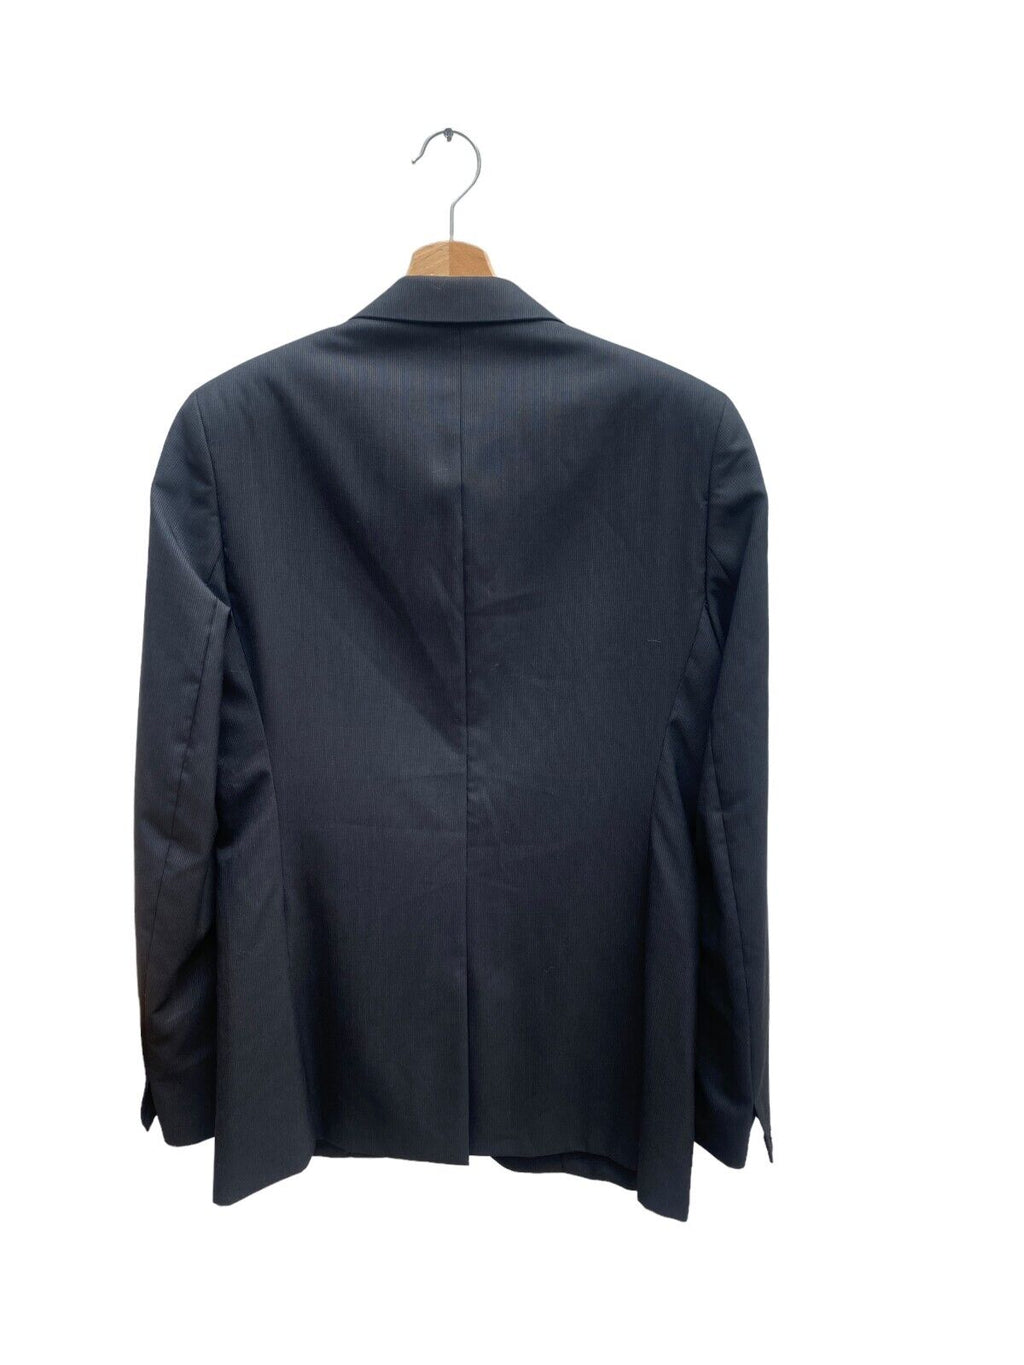 FW 2008 - 2009 Tailor  Black Thin Striped Jacket